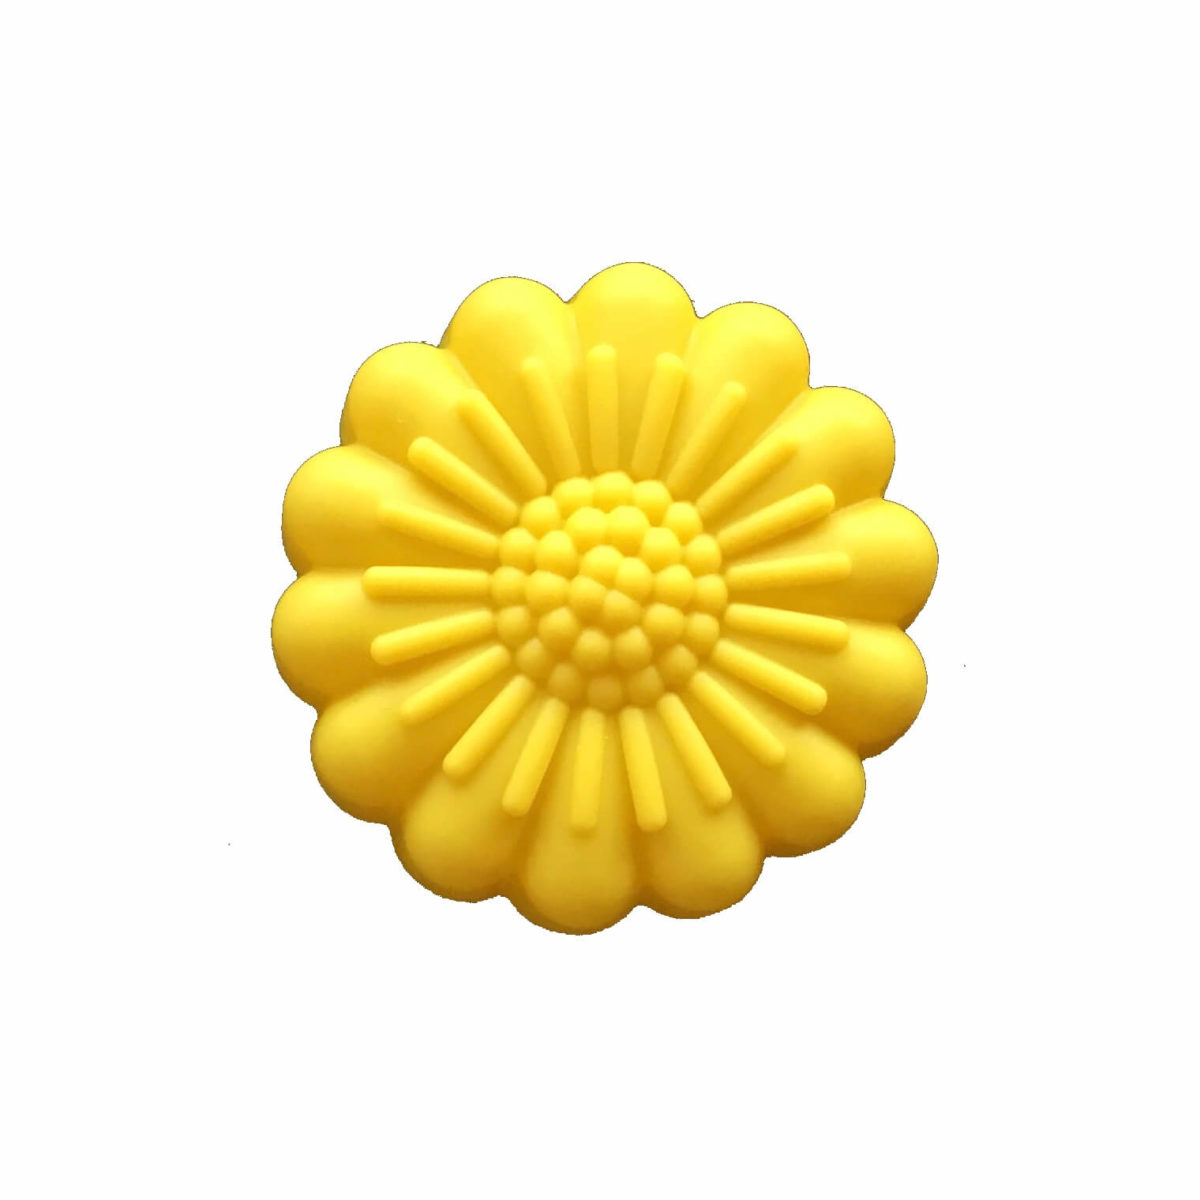 5cm yellow chrysanthemum flower single cavity silicone mould